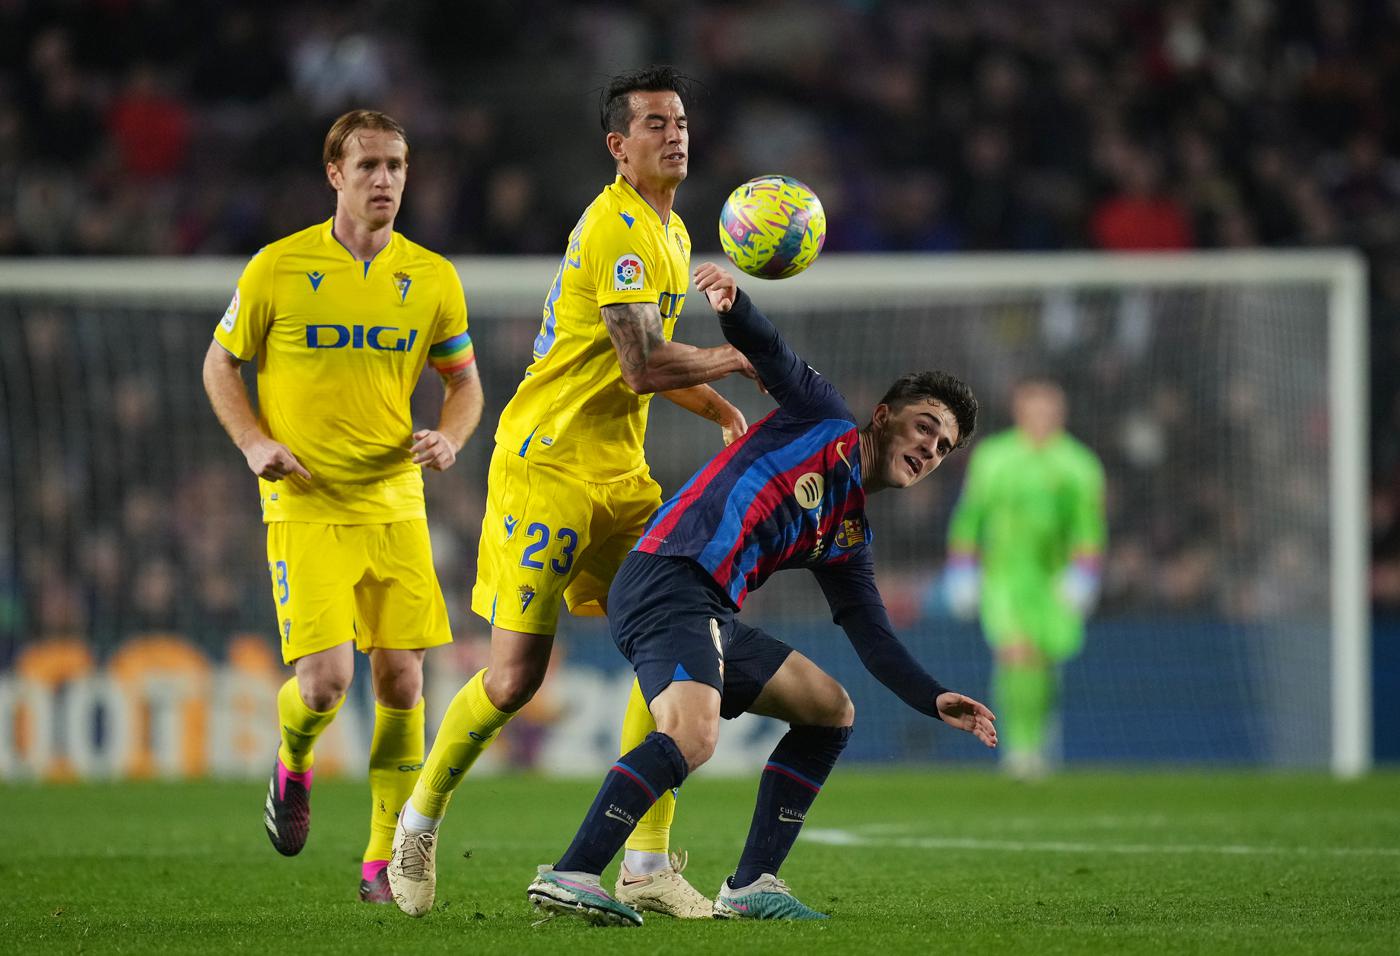 Barcelona - Cadiz - 2:0. Spanish Championship, 22nd round. Match review, statistics